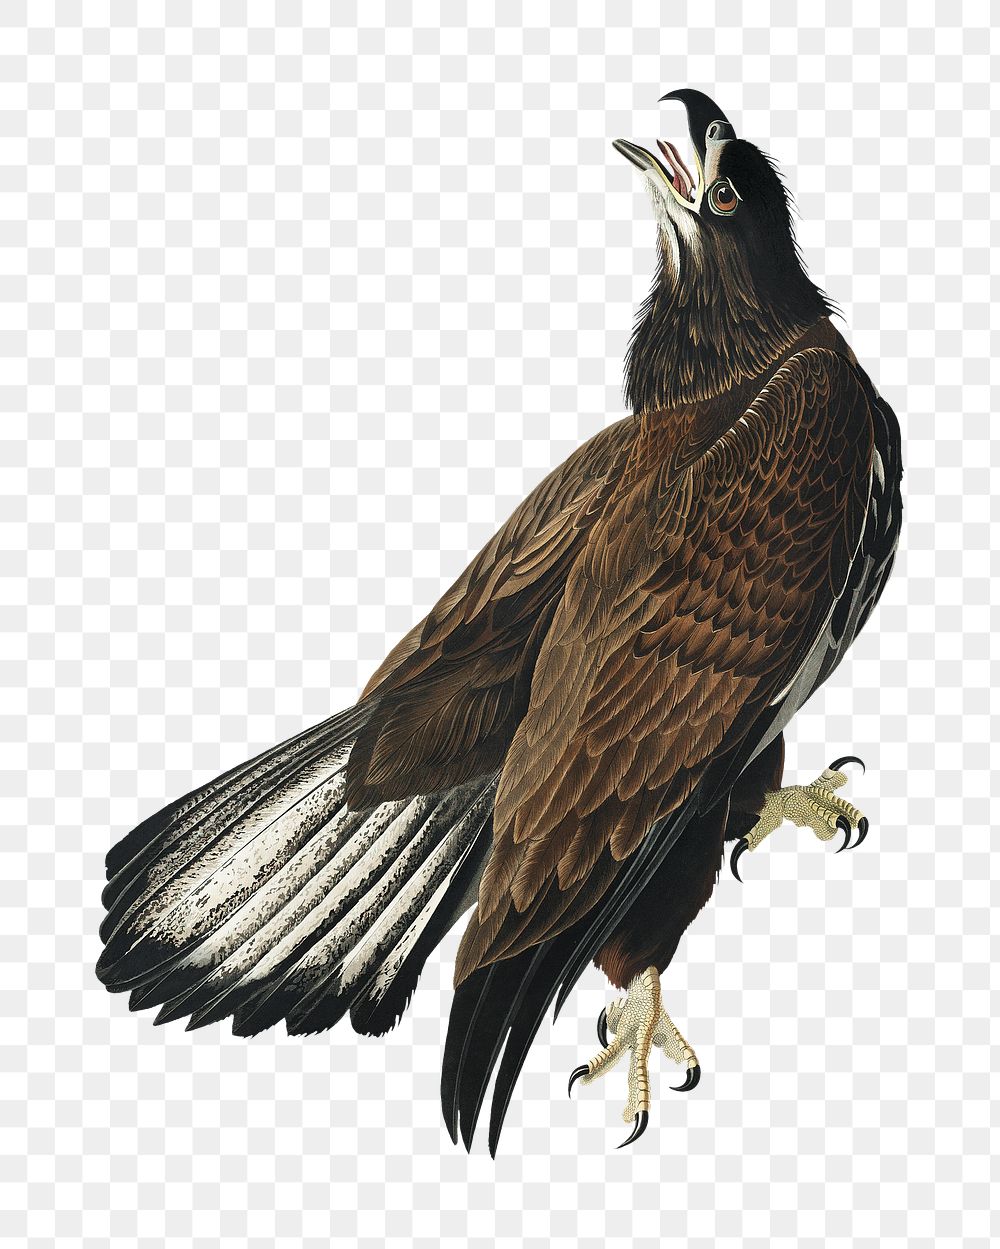 White-headed eagle png bird sticker, transparent background